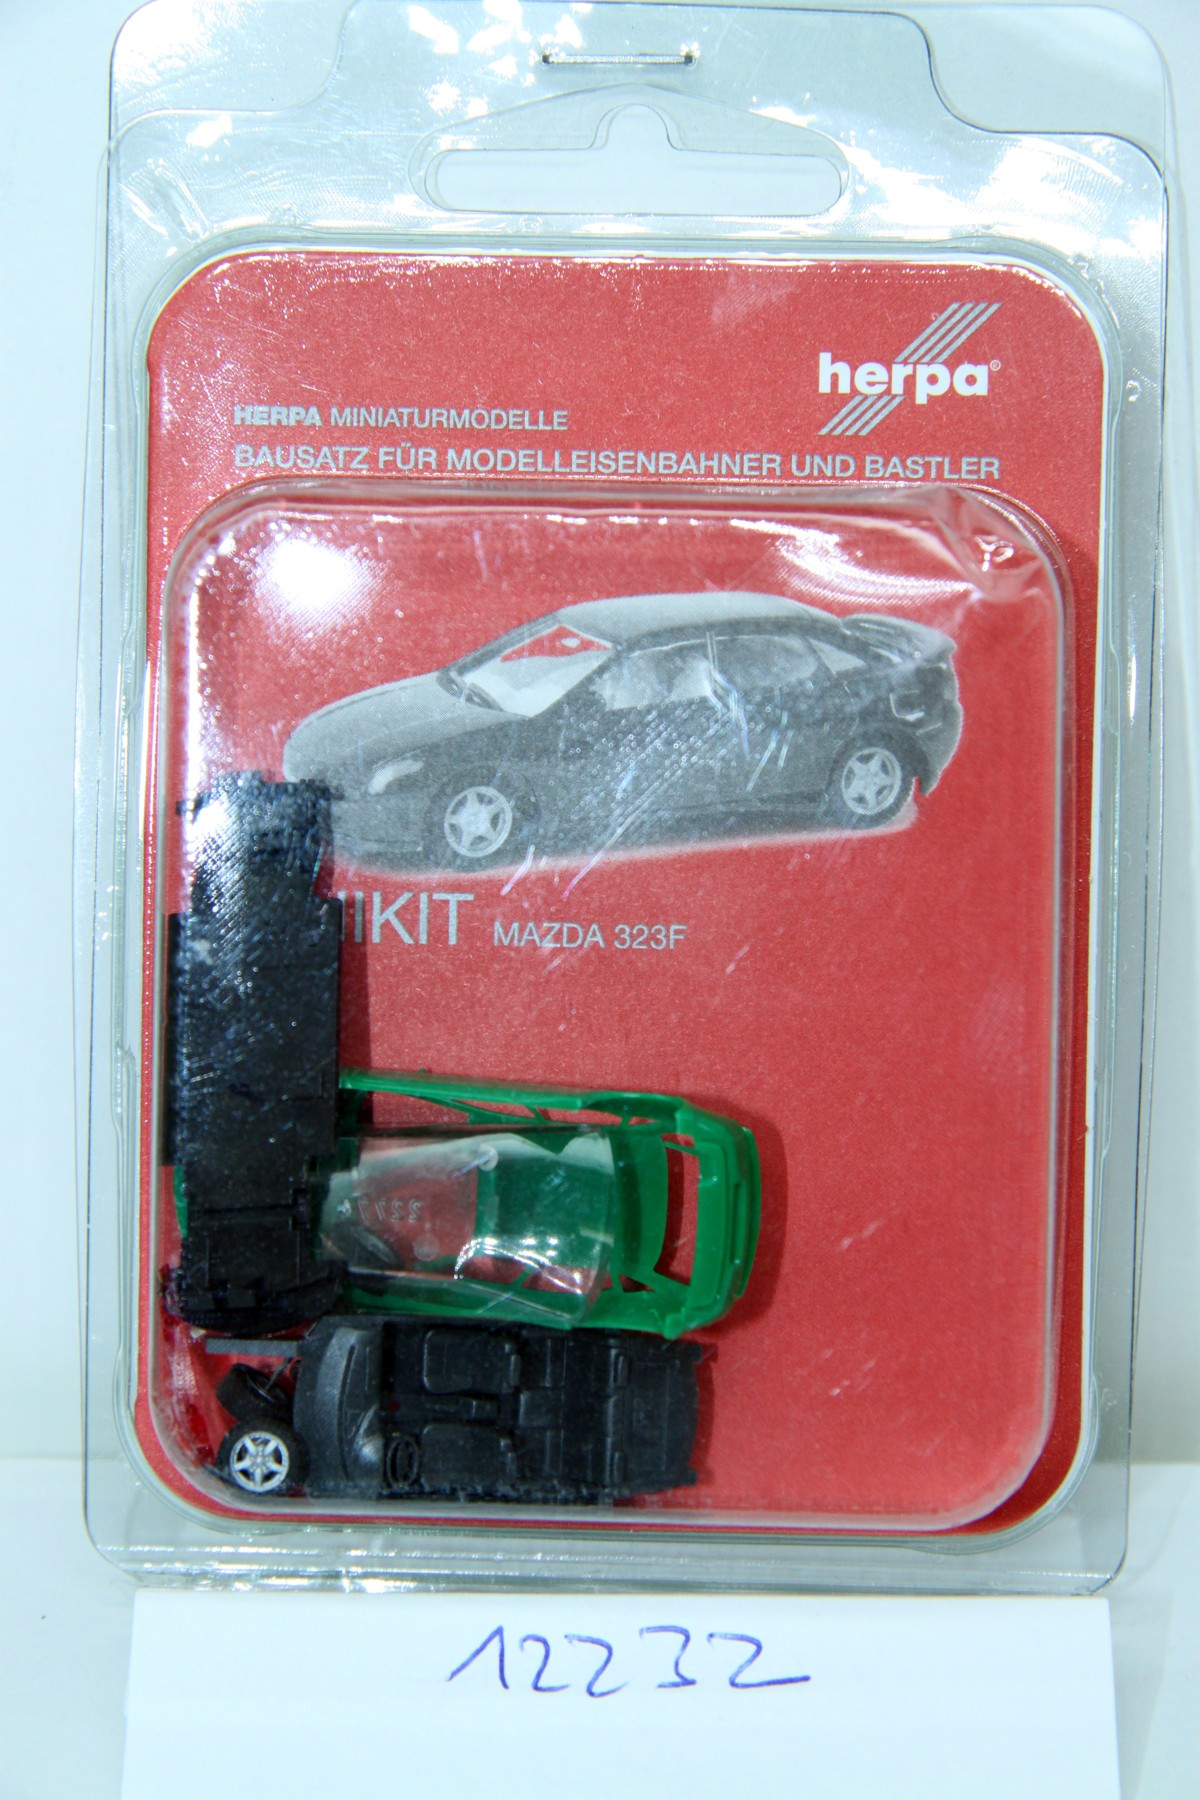 Herpa 012232, Minikit Mazda 323F, green, for H0 gauge, with original box.